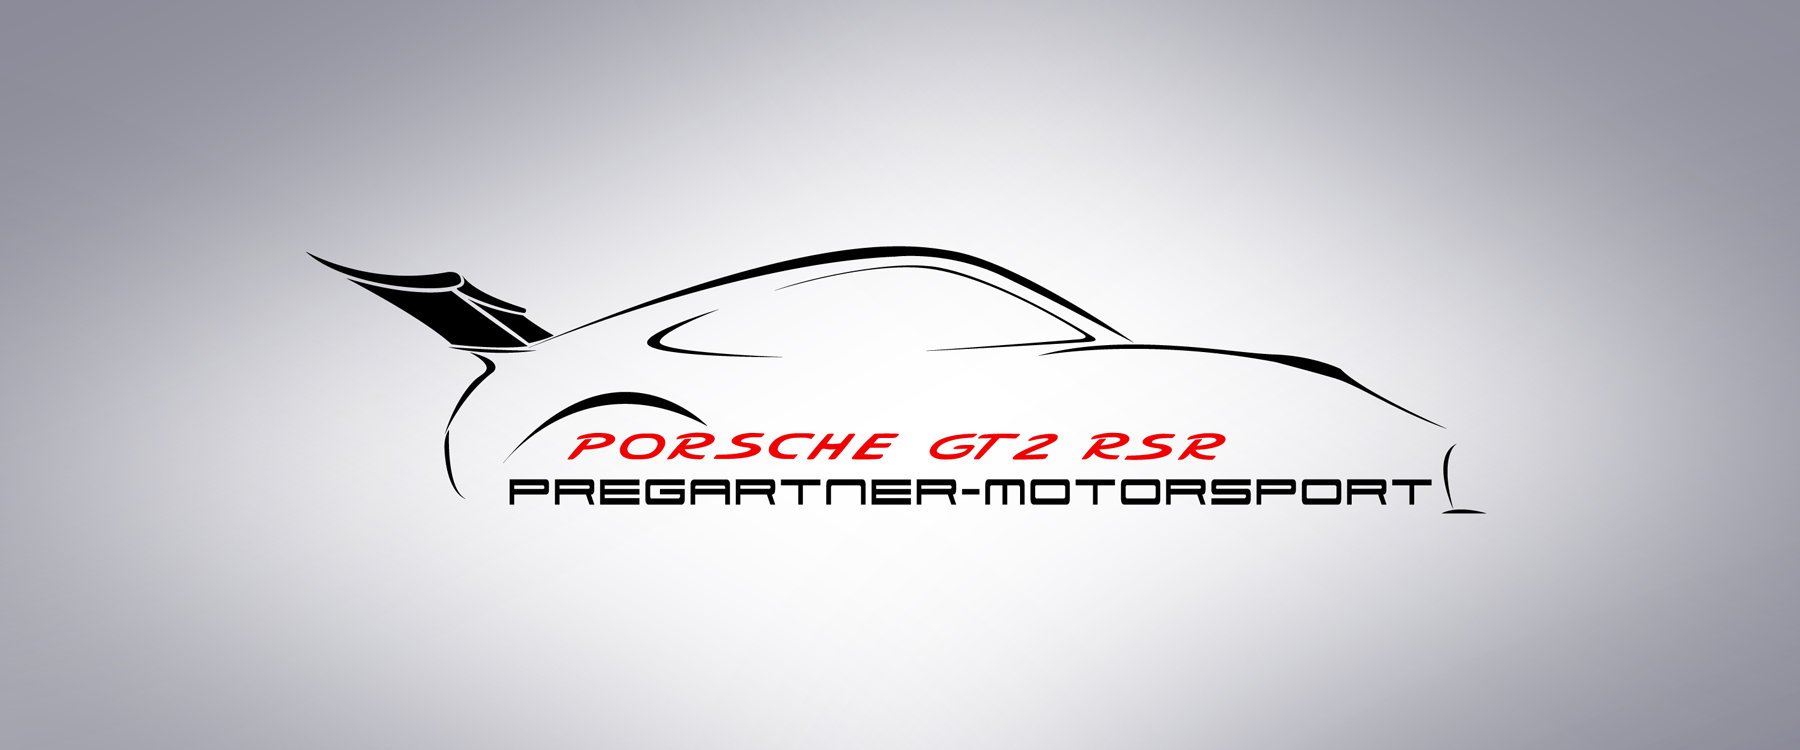 Porsche GT2 RSR Pregartner Motorsport #1